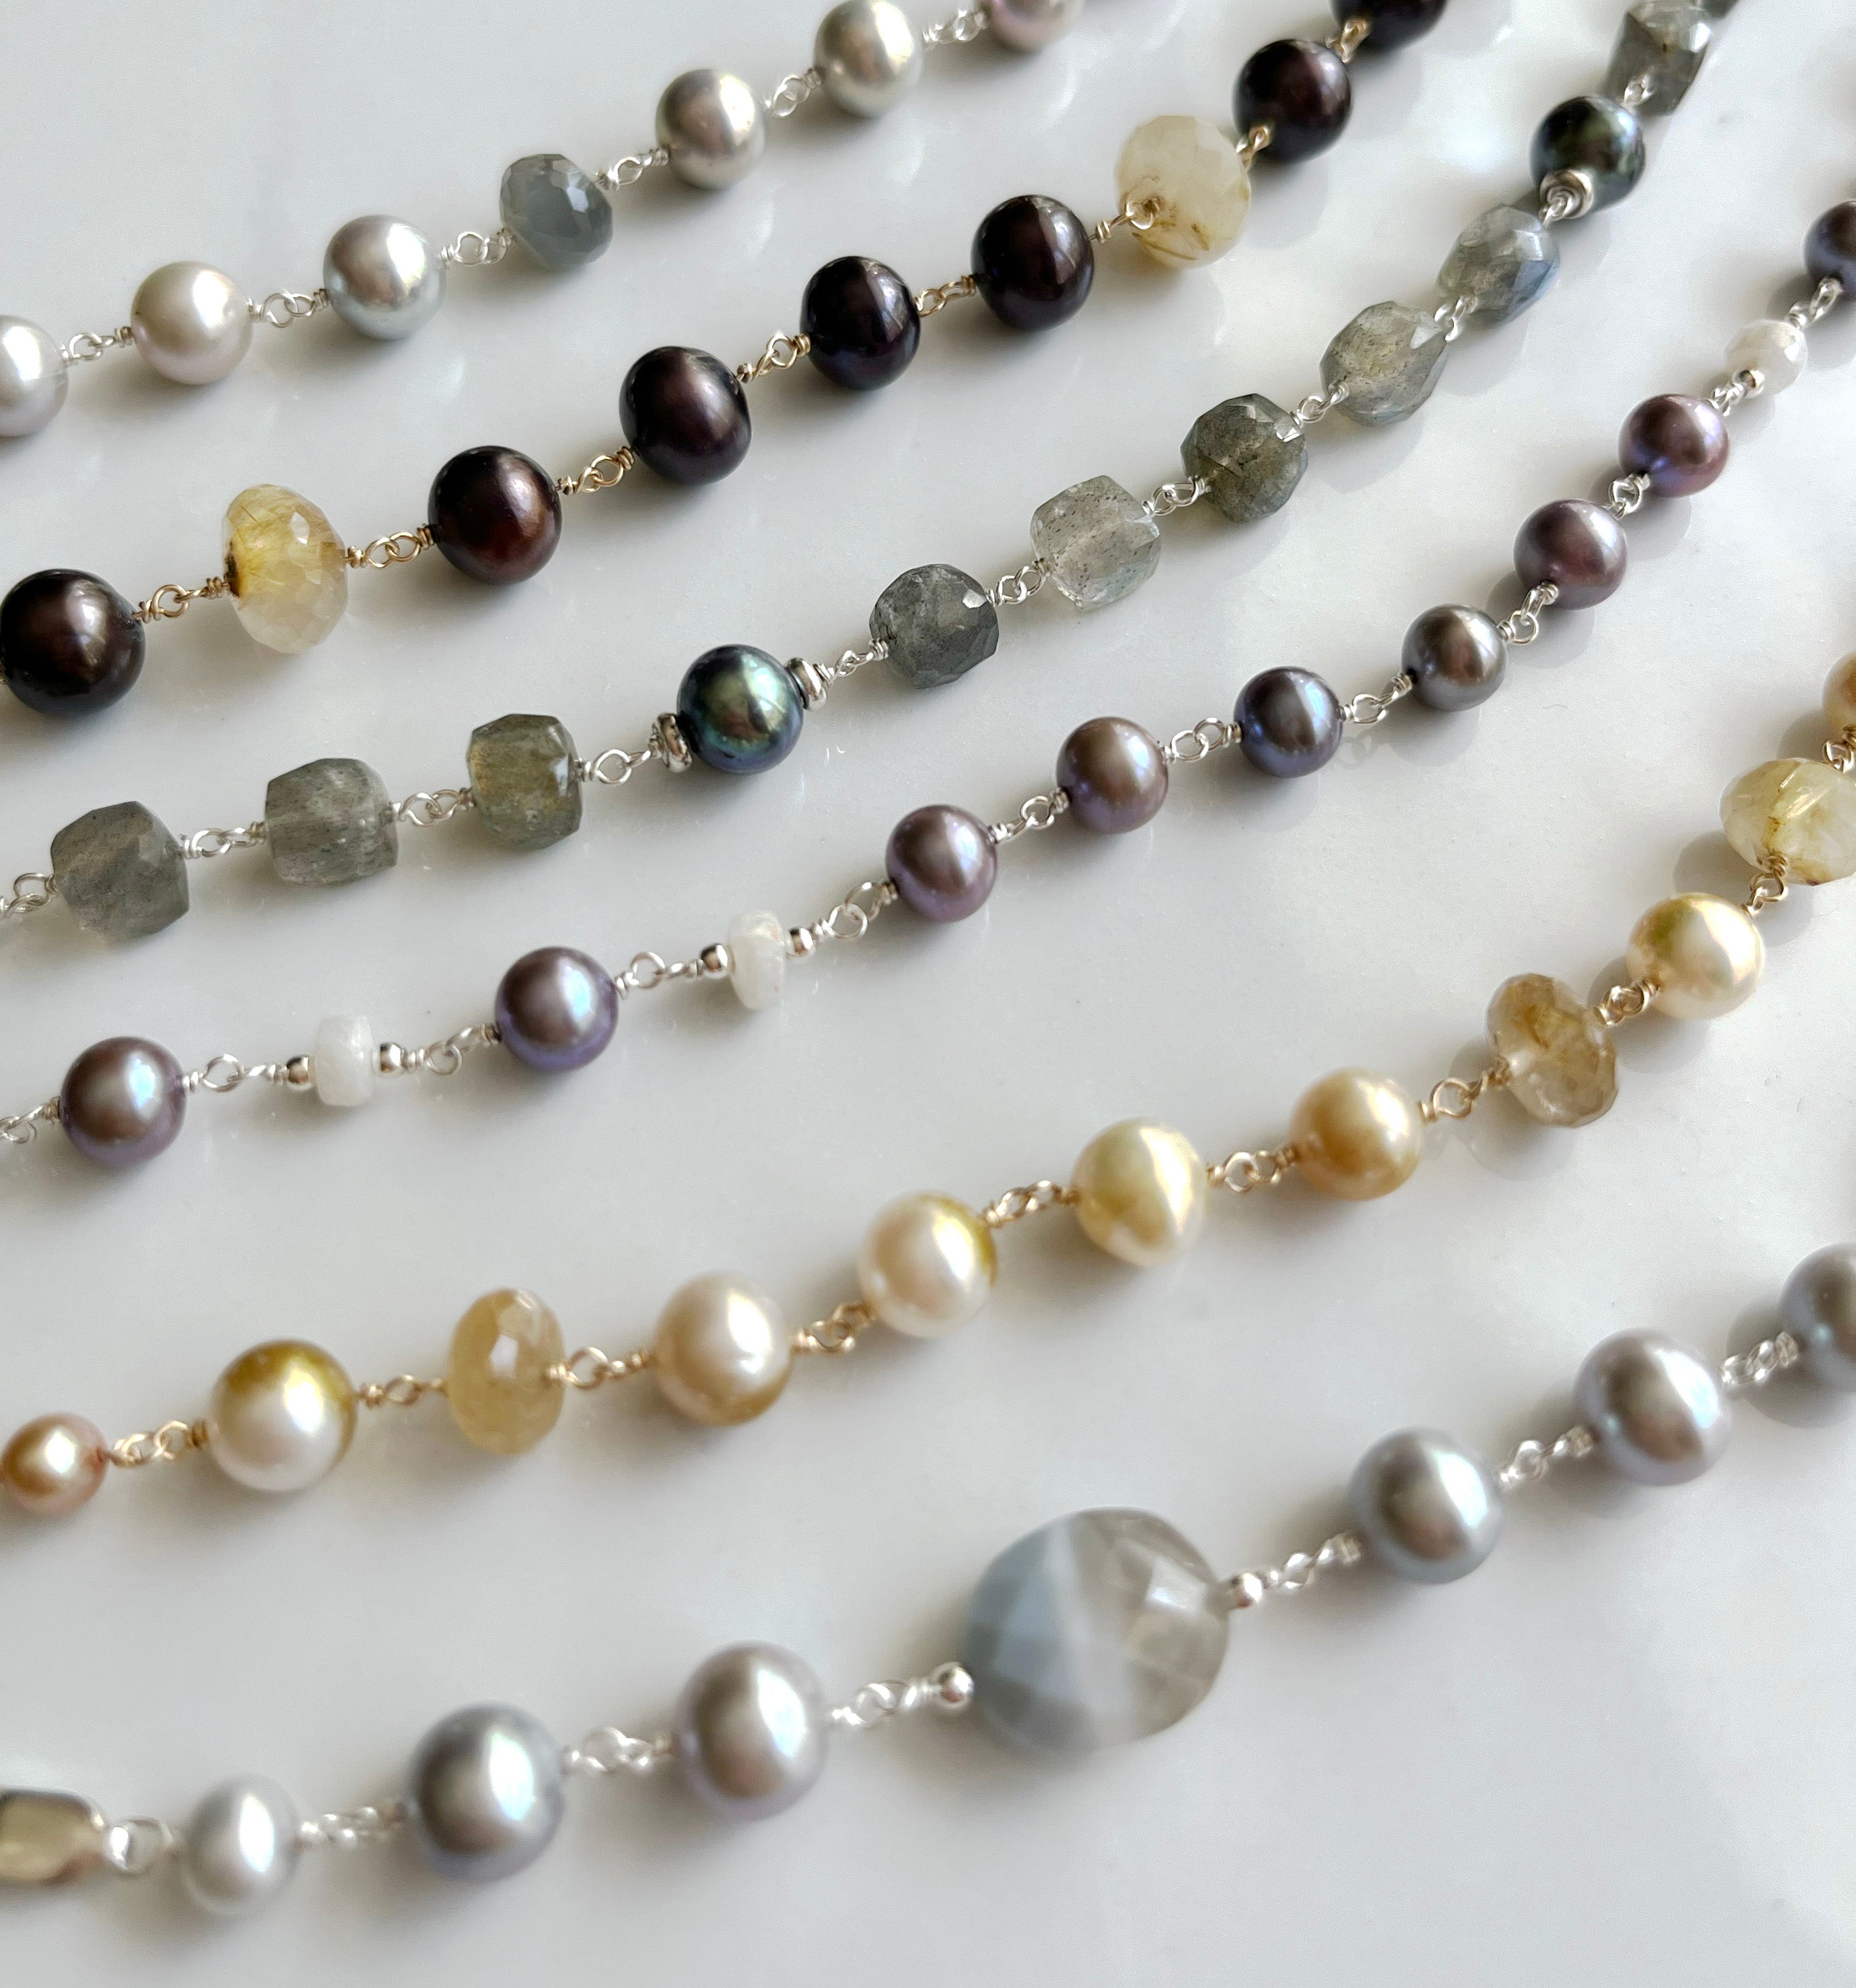 Pearl and gem bracelets